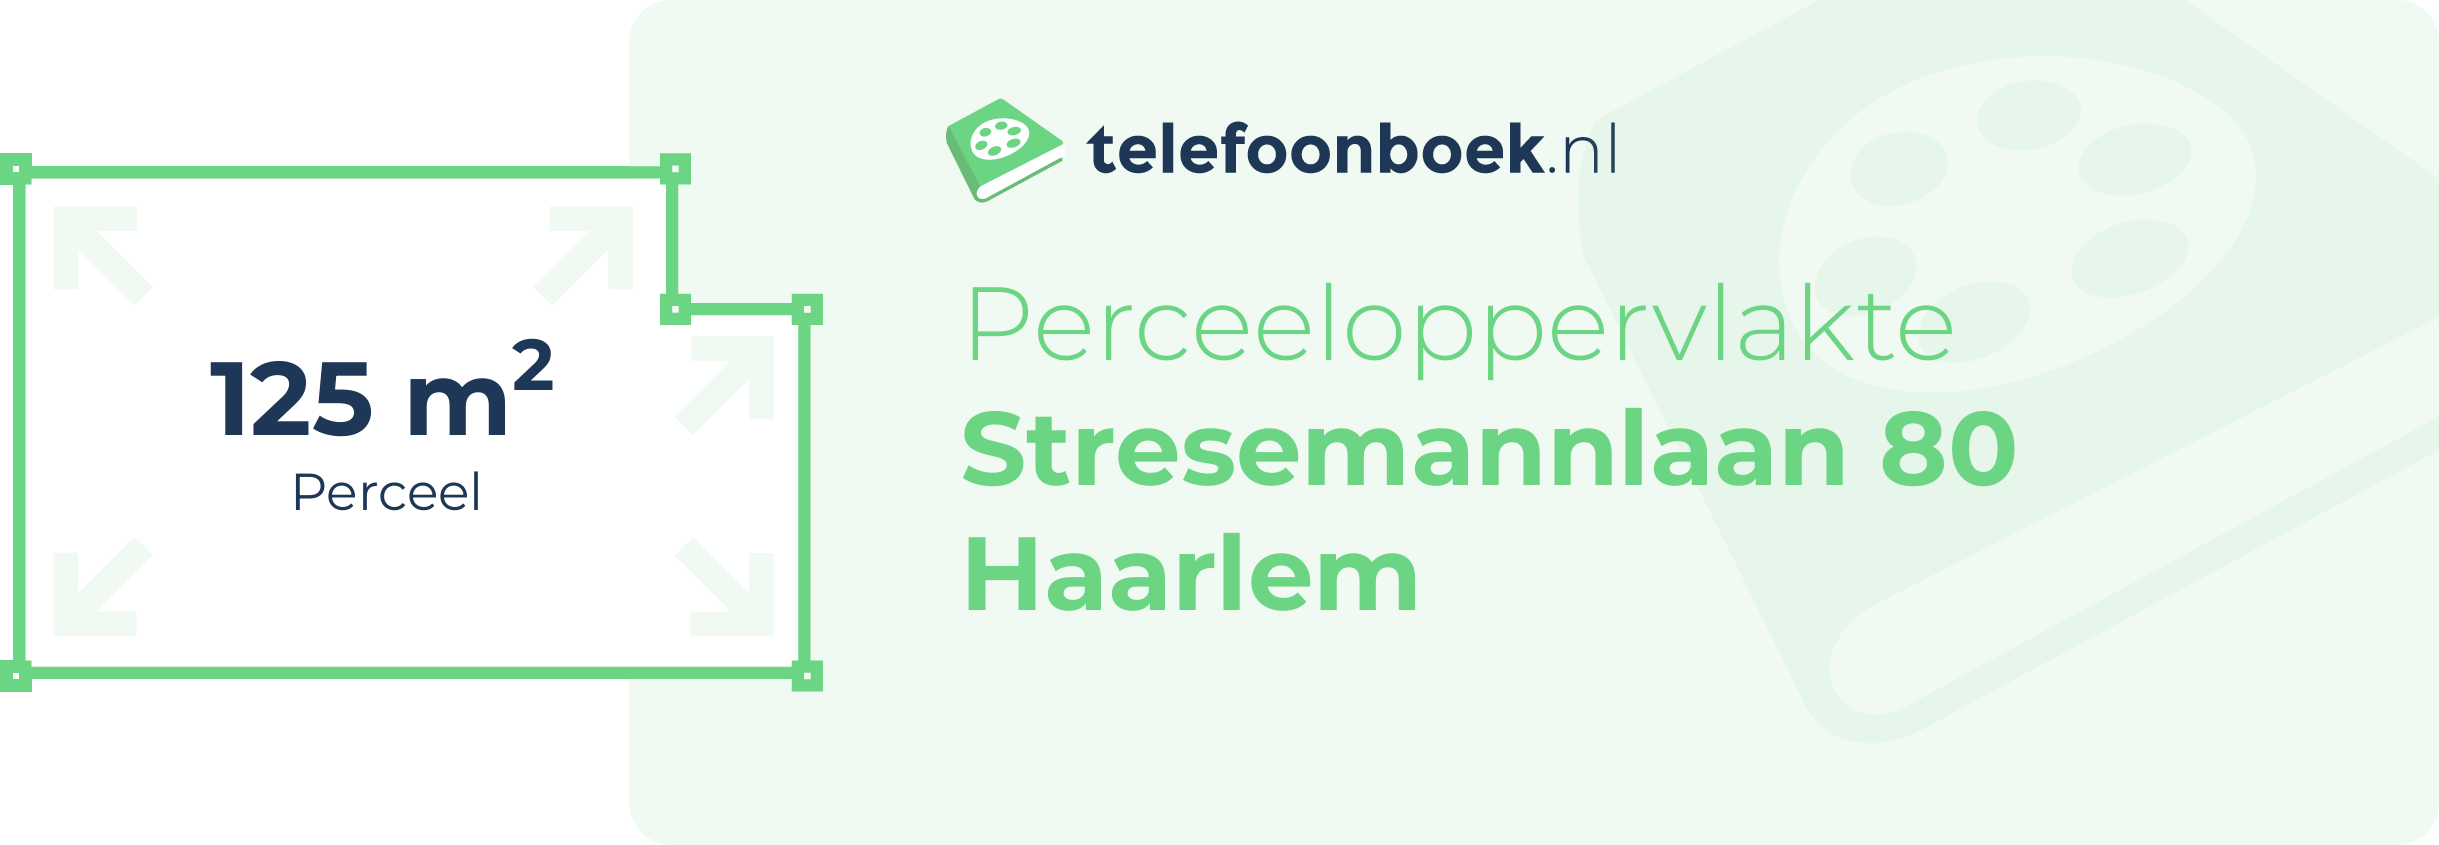 Perceeloppervlakte Stresemannlaan 80 Haarlem